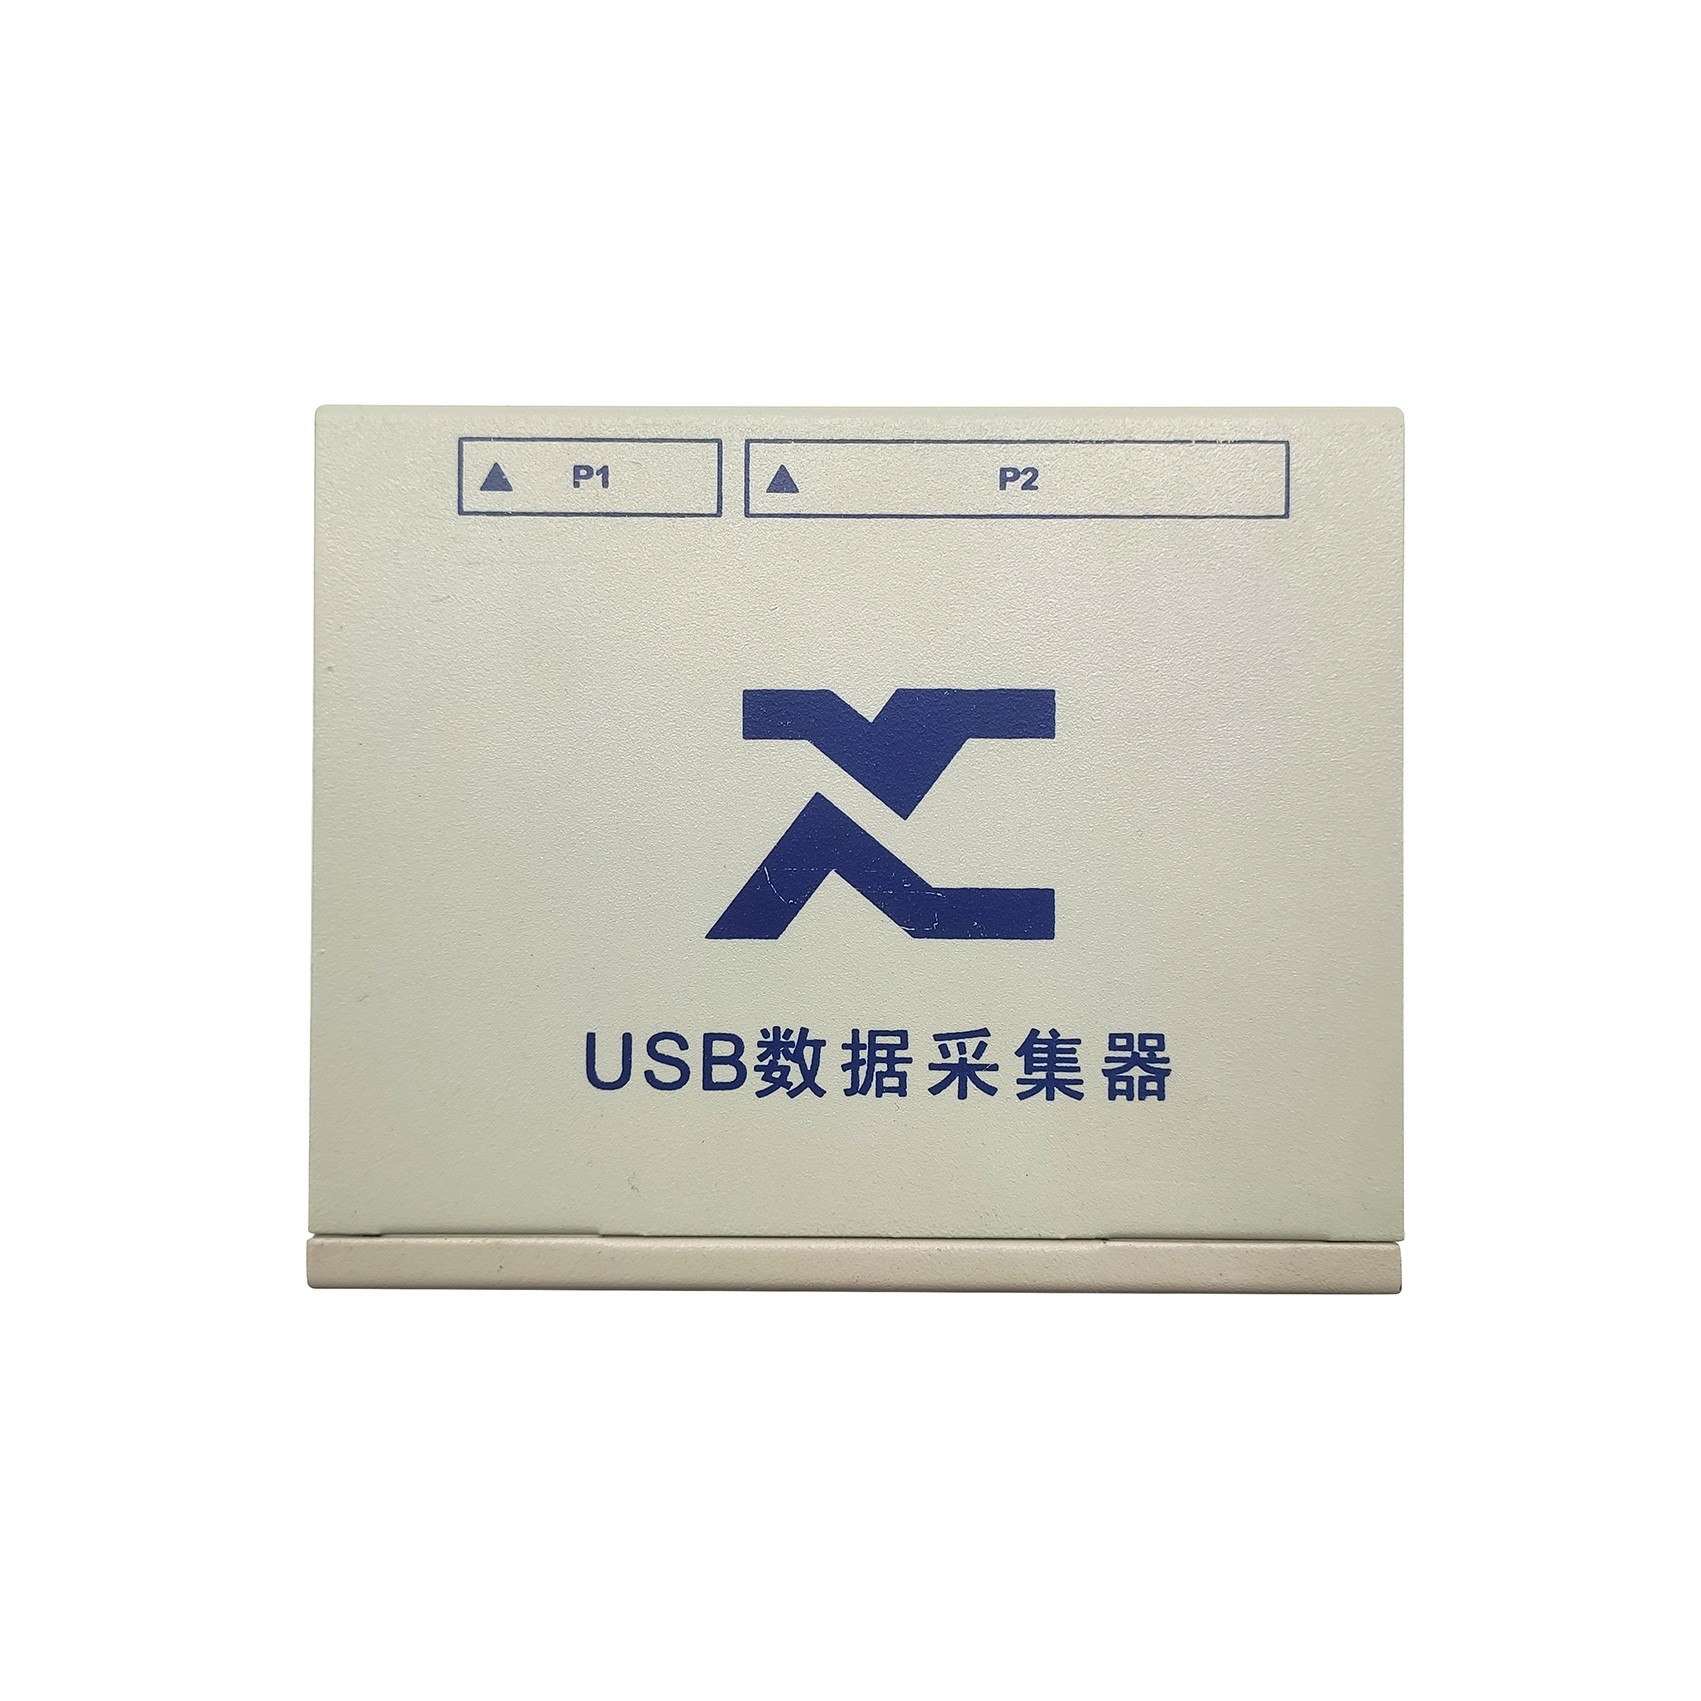 USB-1734